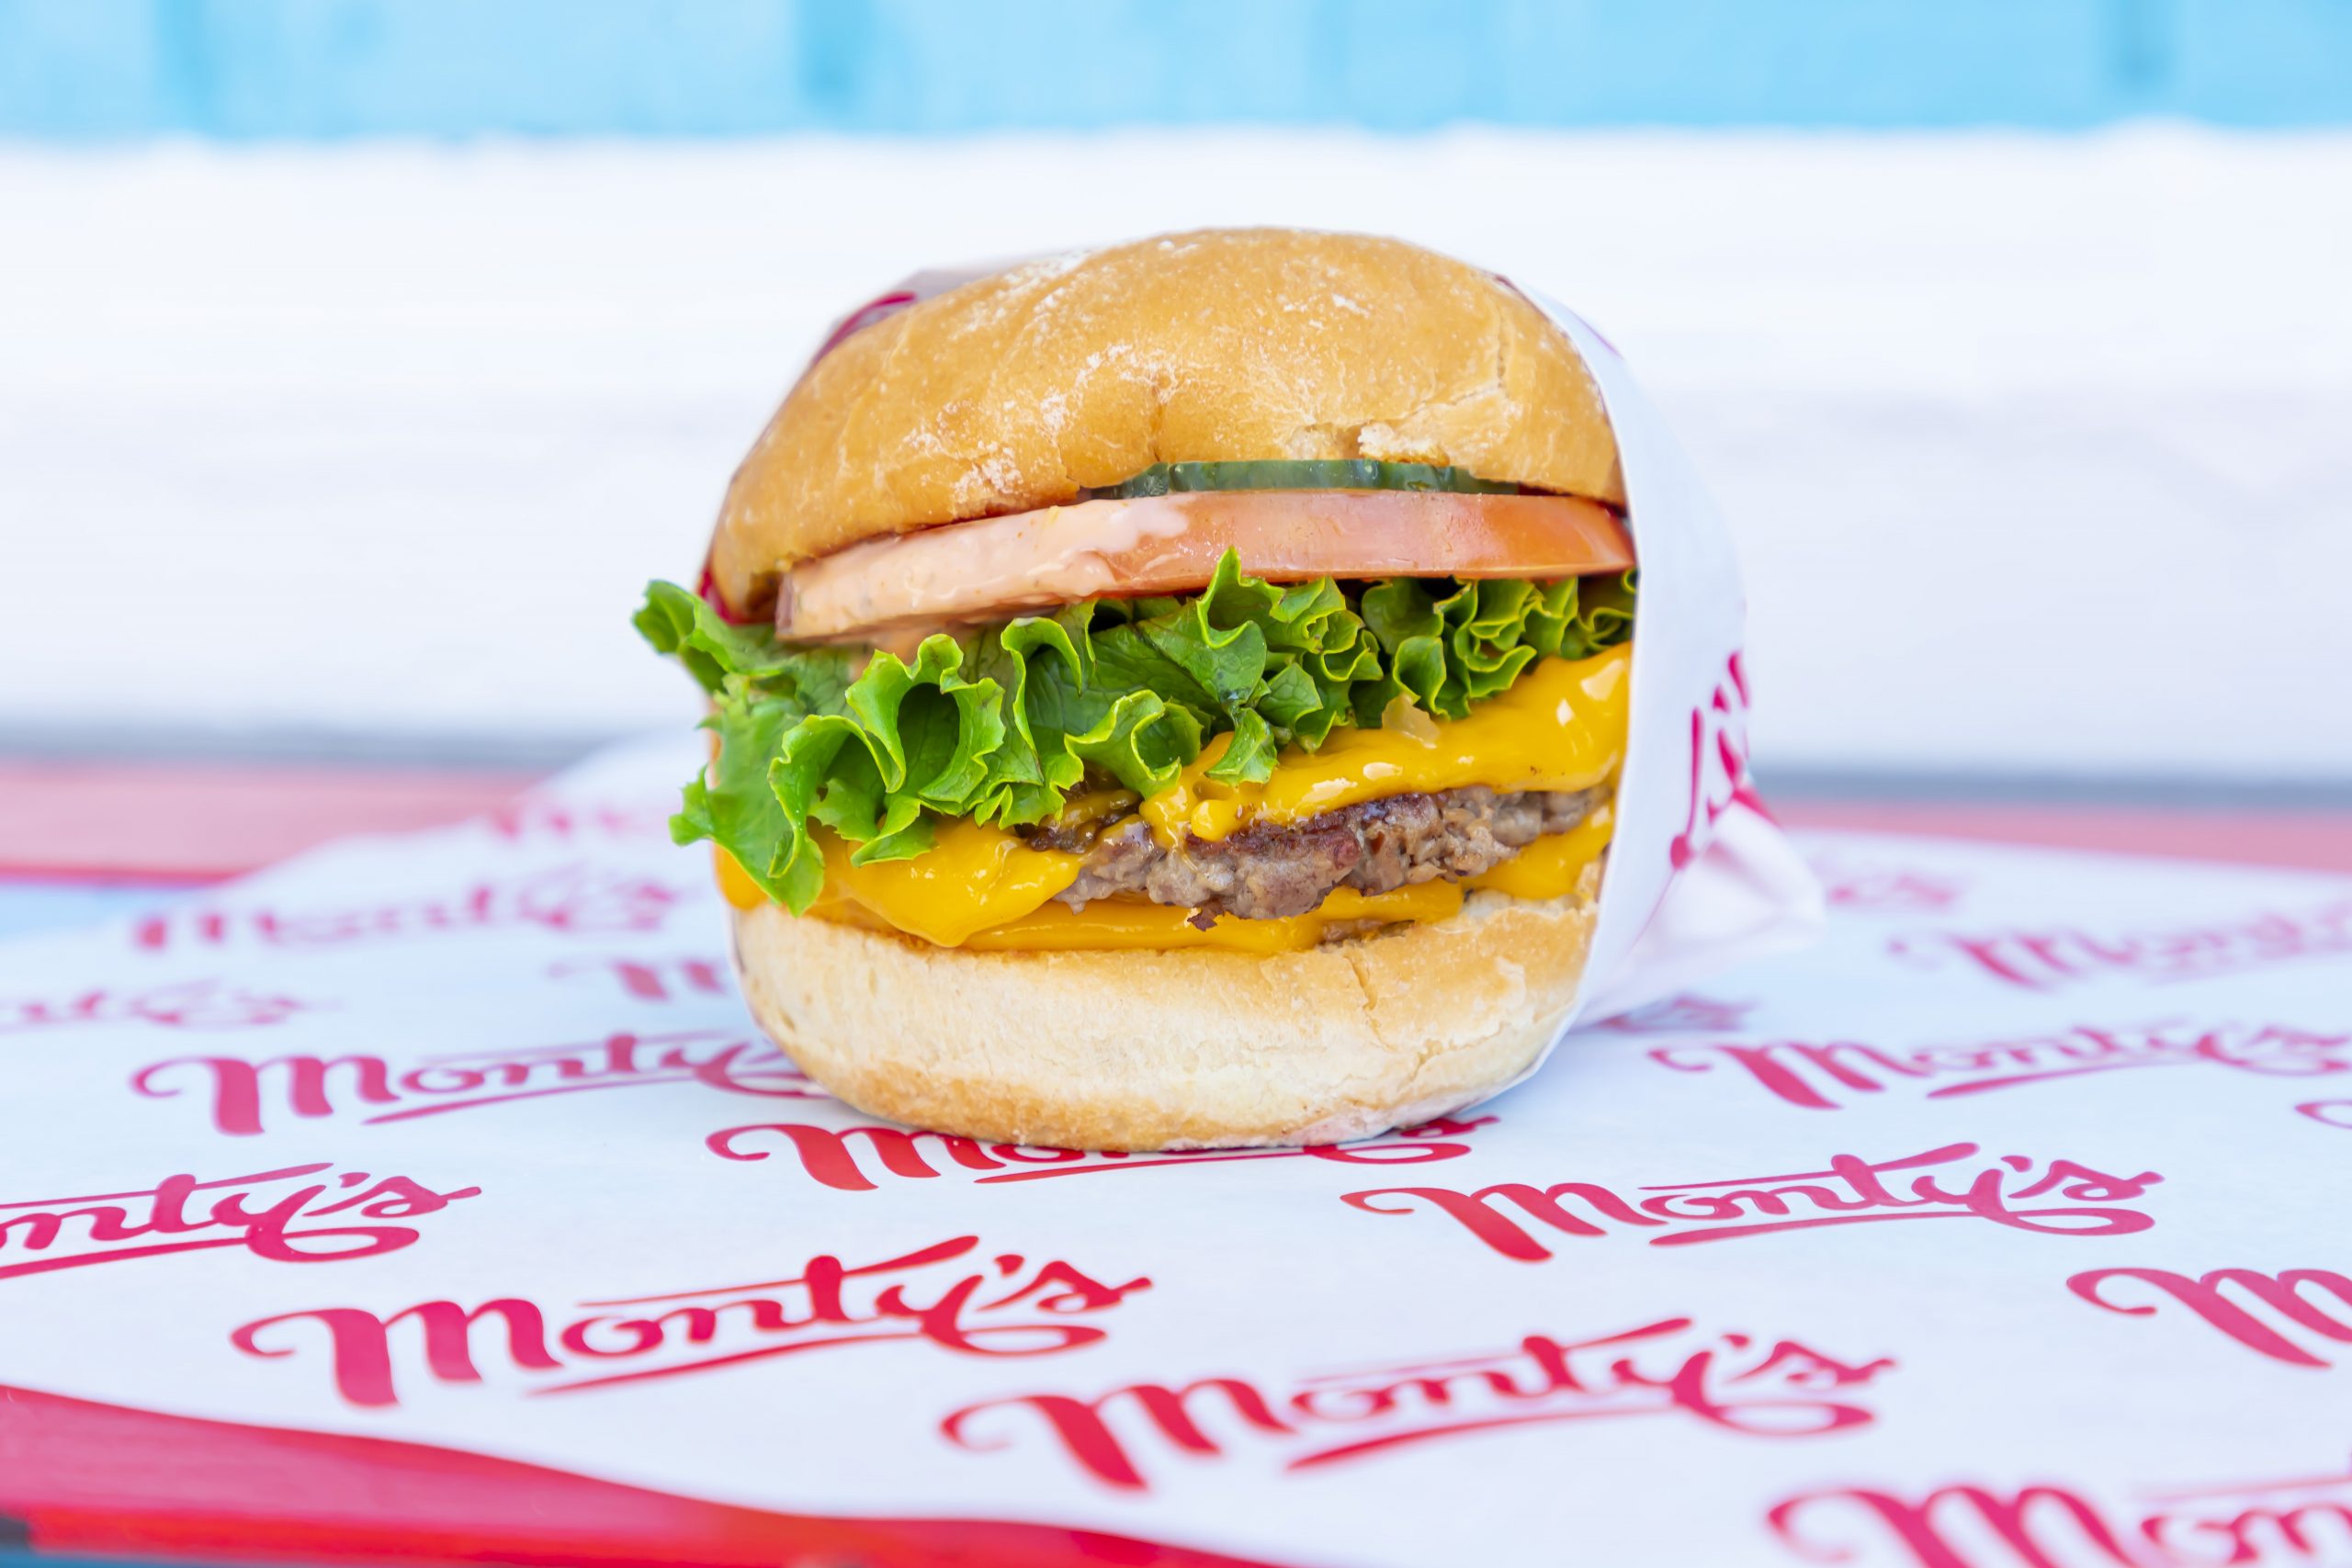 Monty’s Good Burger